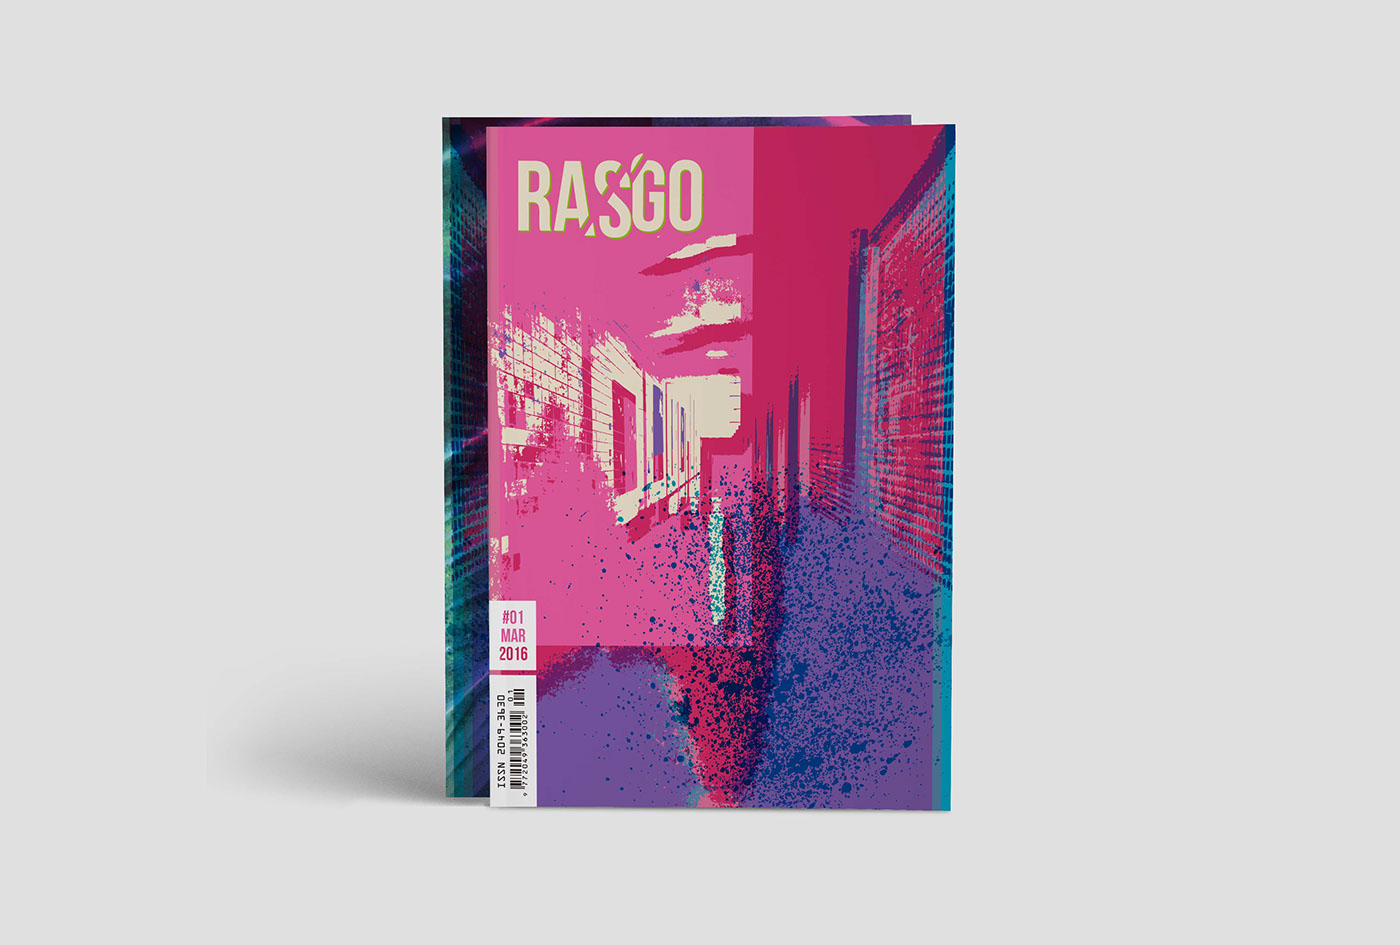 Rasgo magazine Project digital art EBA revista UFRJ projeto 200 años julie pires